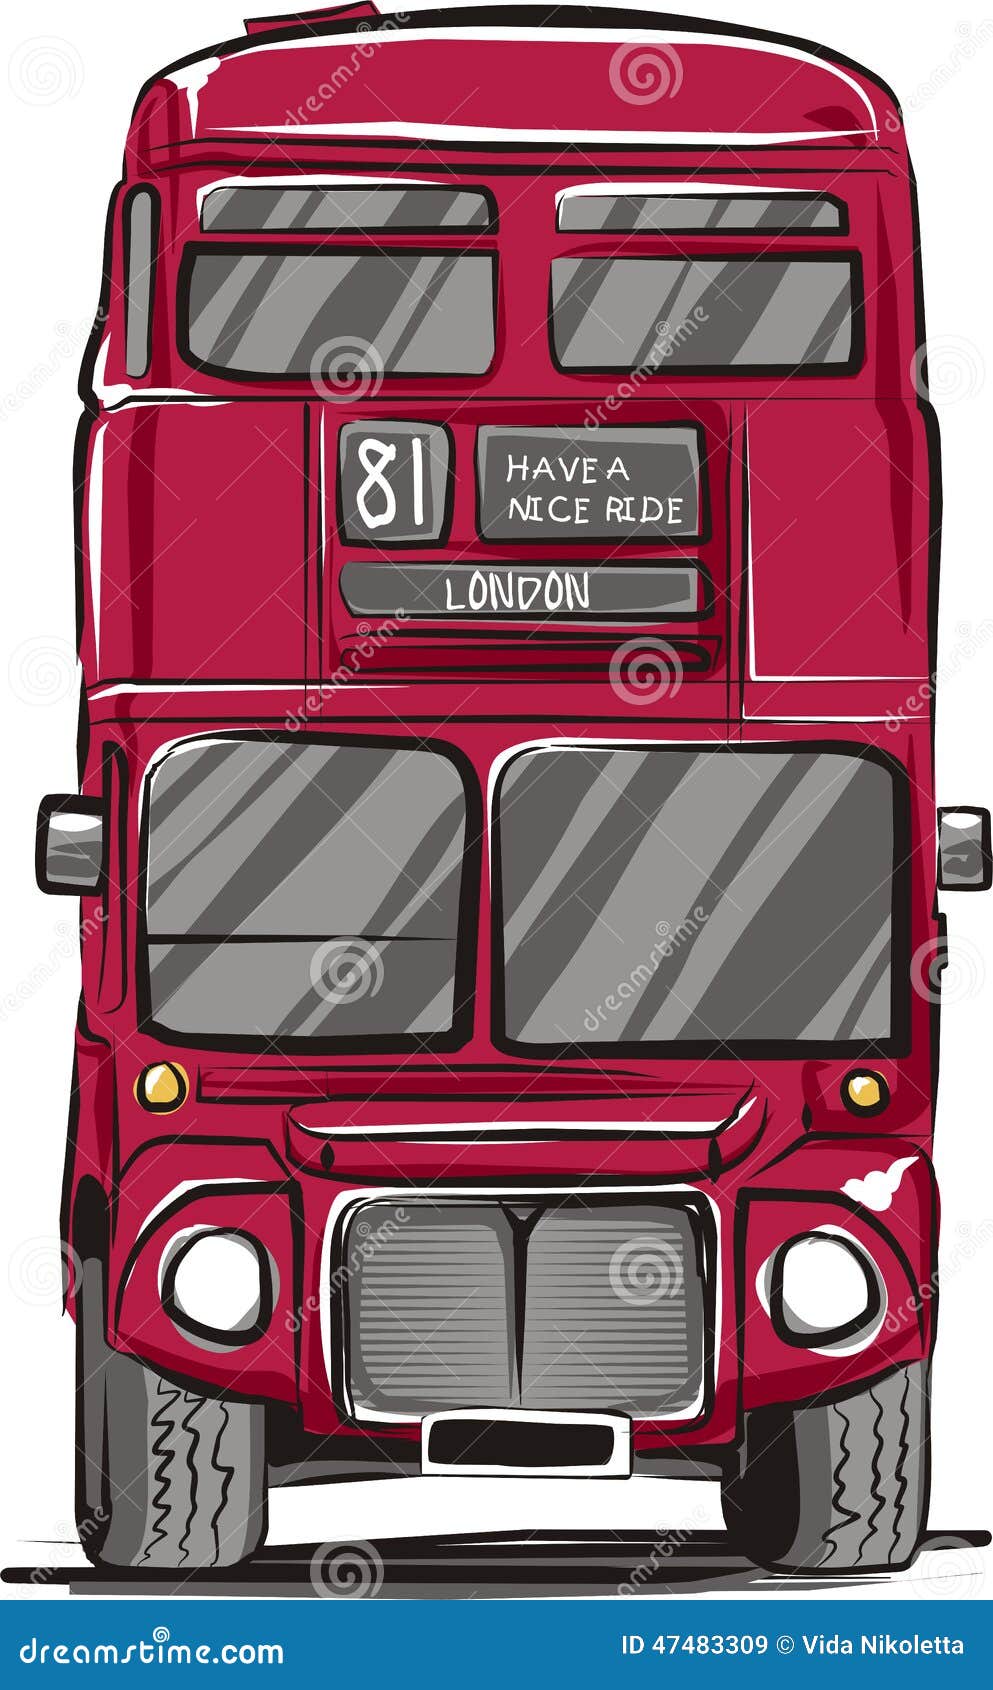 Grunde Falde sammen helgen London bus stock illustration. Illustration of england - 47483309